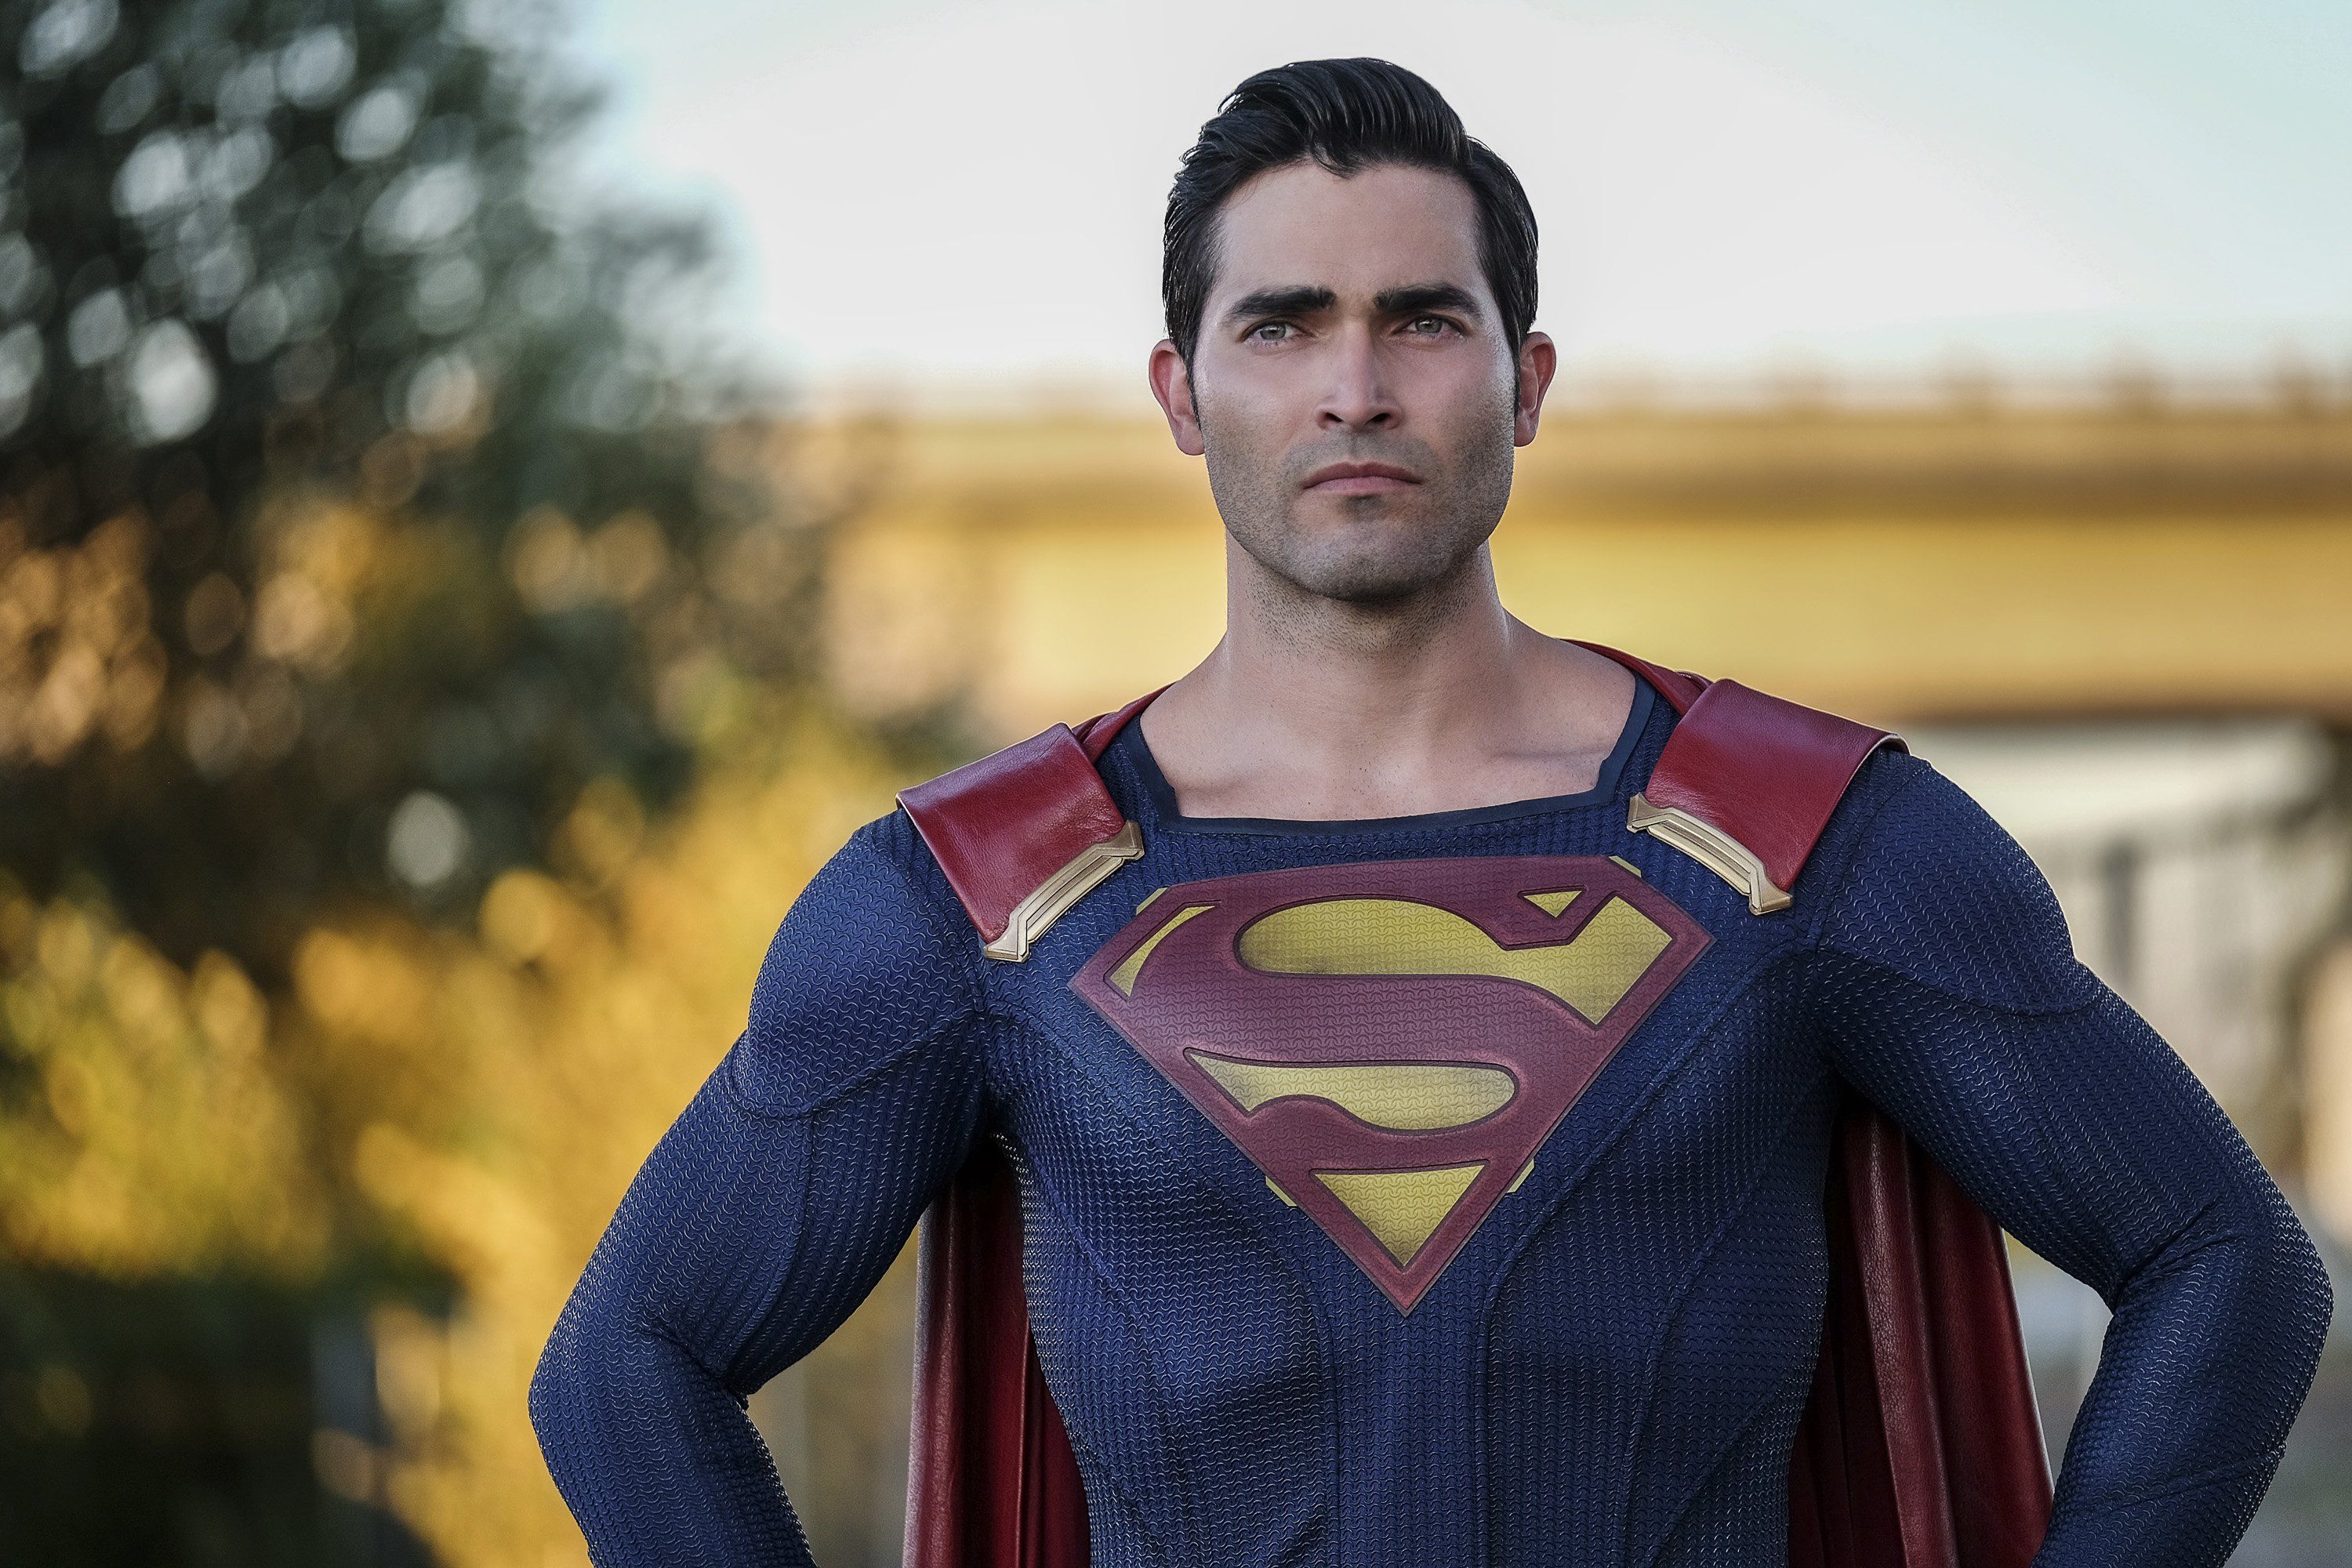 Supergirl actor Superman Tyler Hoechlin